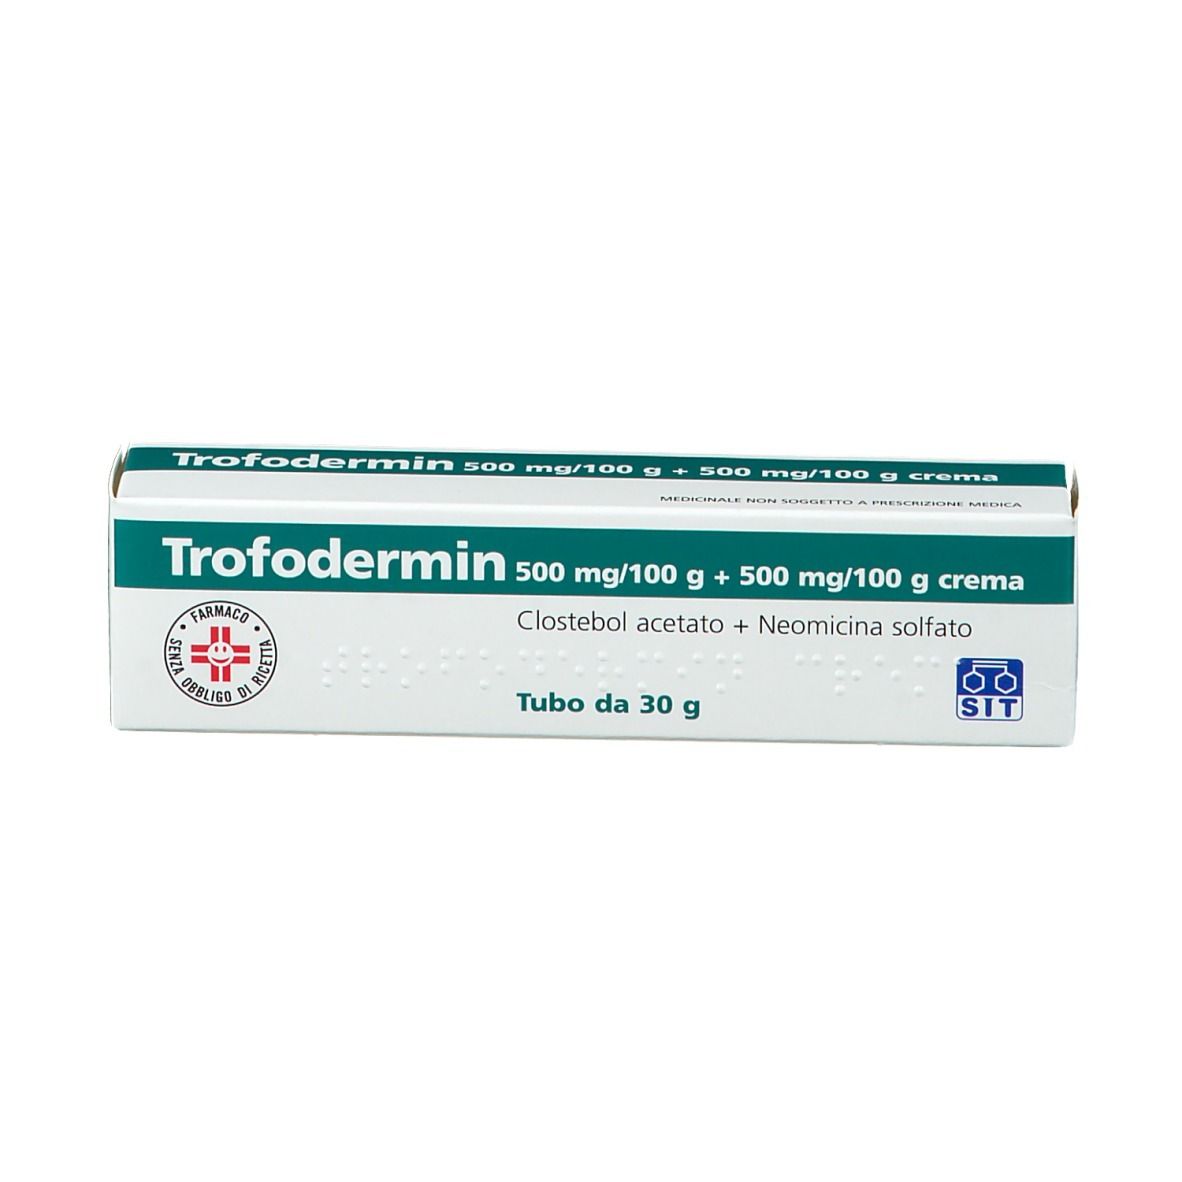 Trofodermin 500 mg/100 g